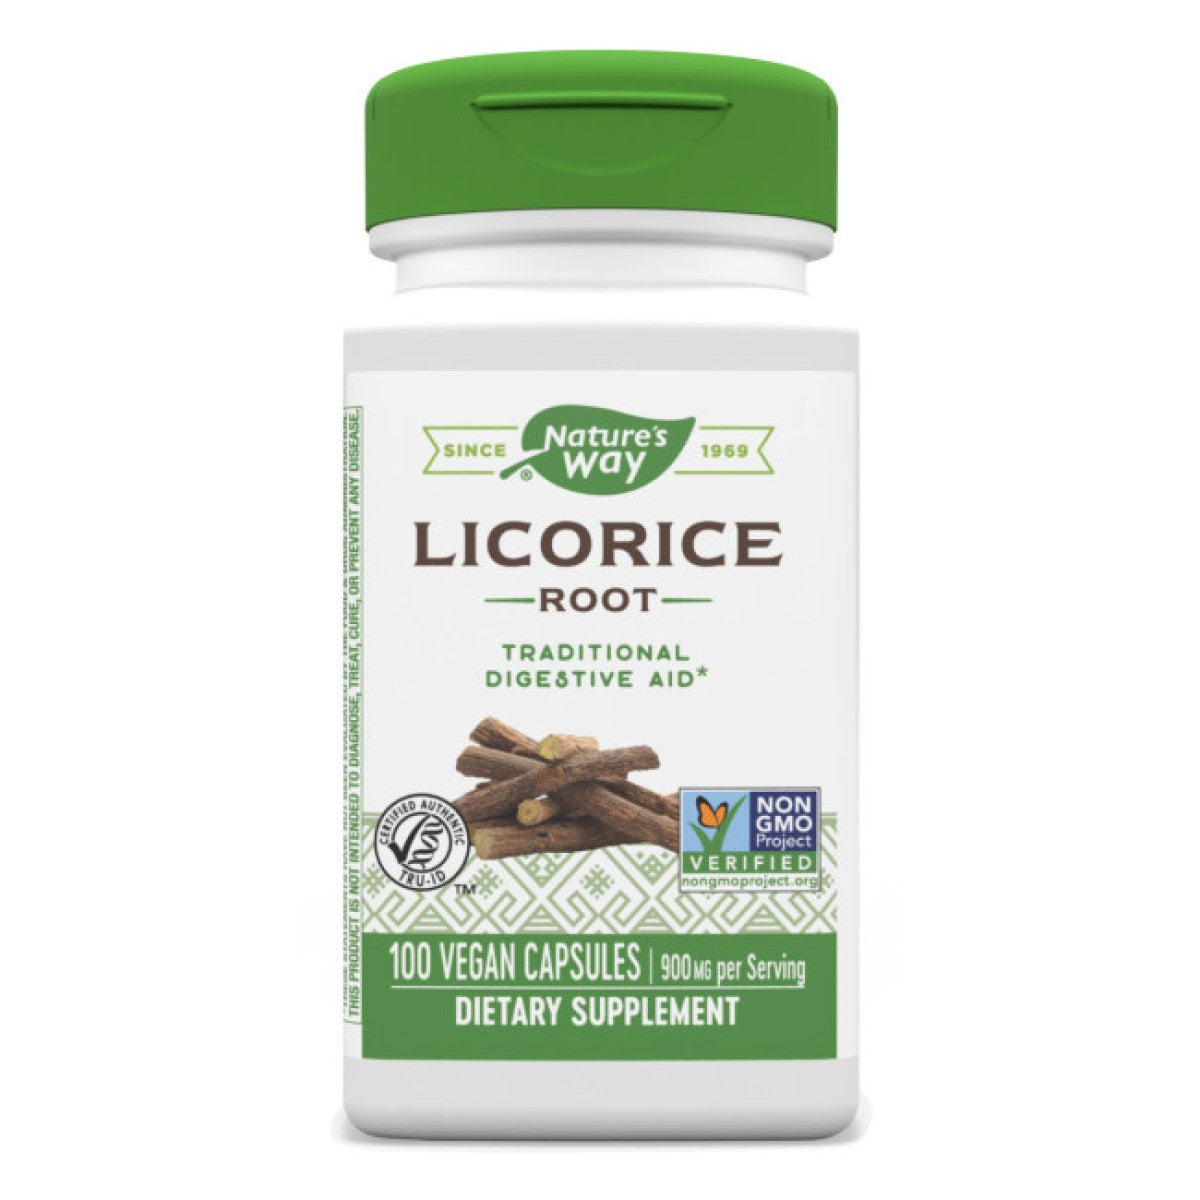 Primary image of Licorice Root